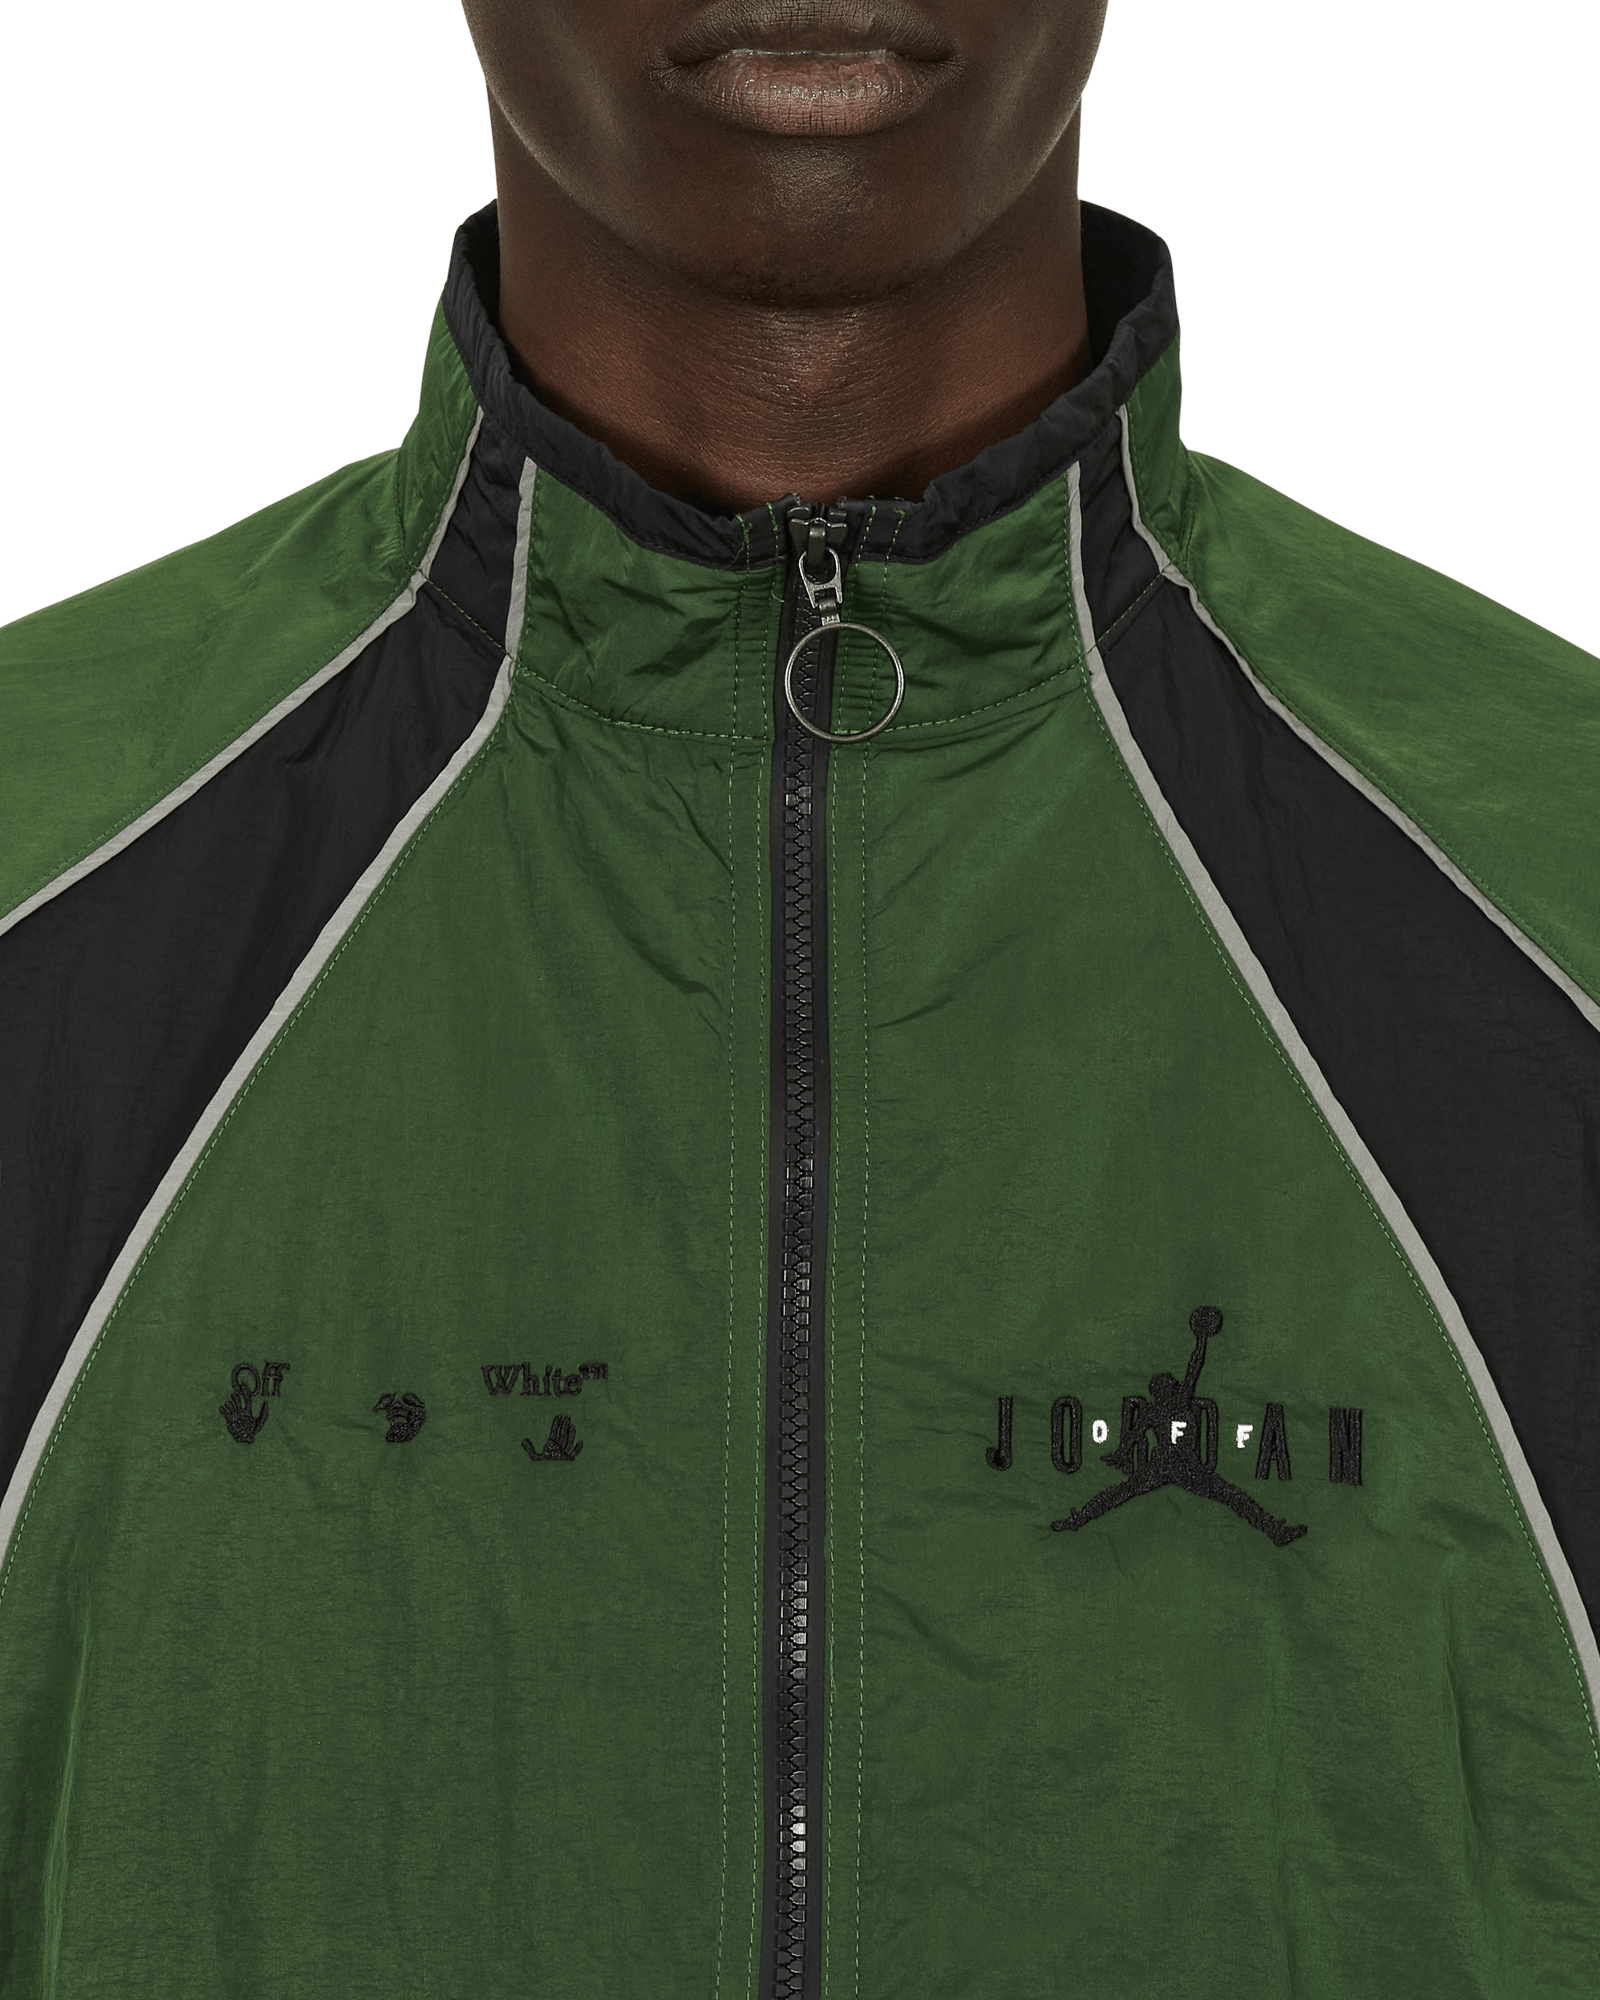 Nike Jordan Ow Trk Jkt Forest Green/Black Coats and Jackets Jackets CV3502-361